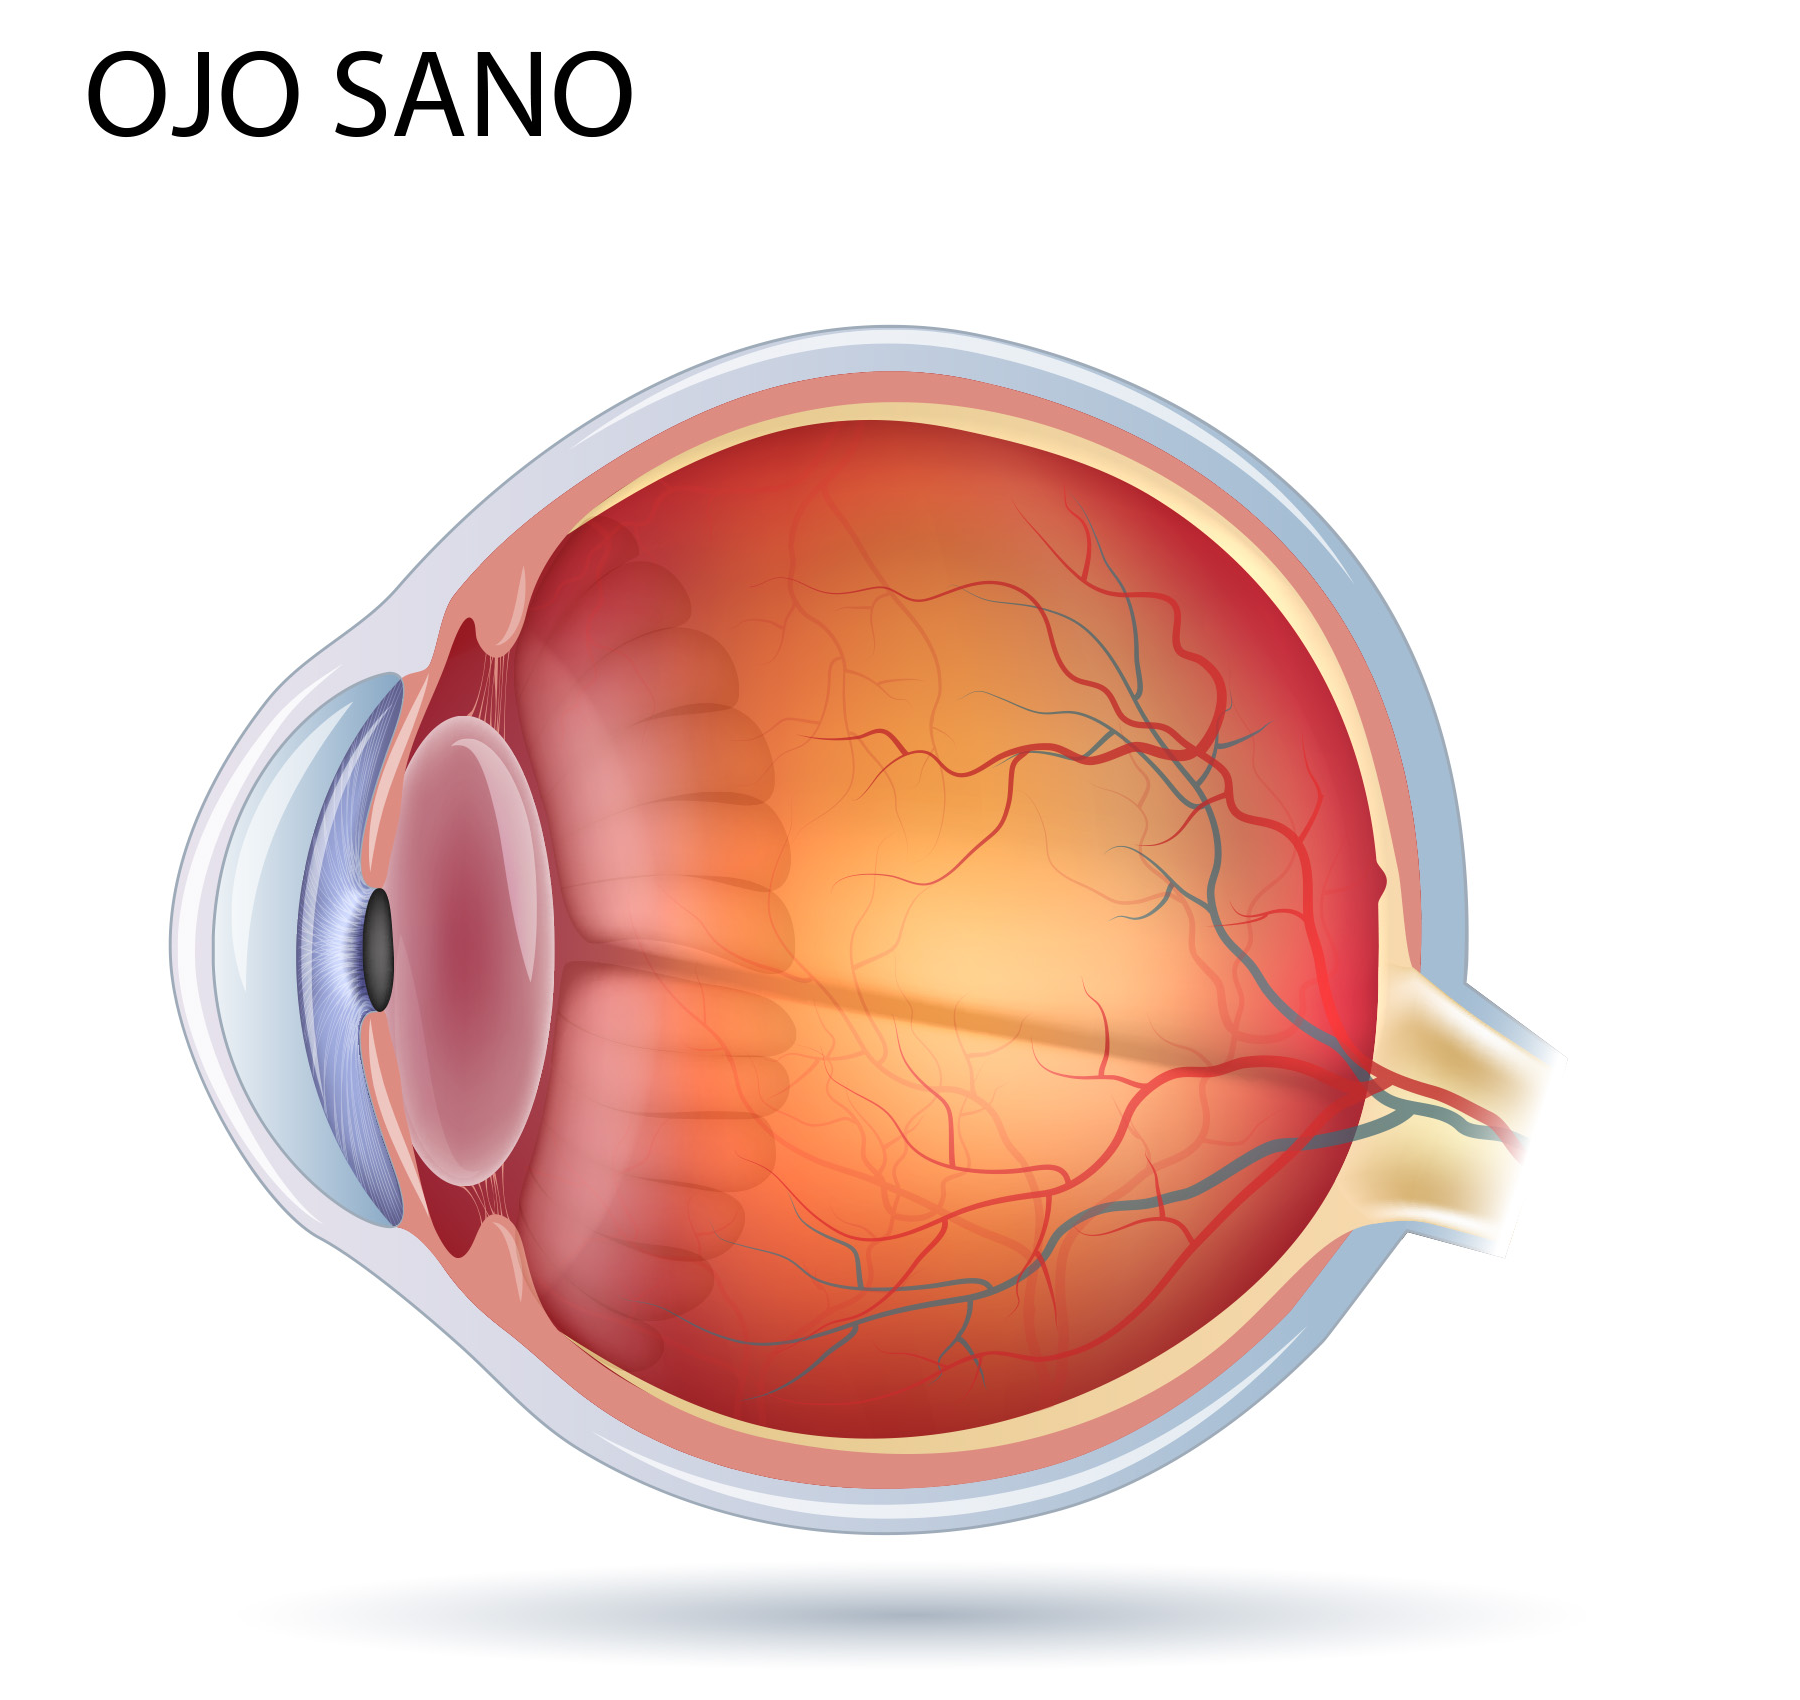 //oftalmologoensaltillo.com.mx/wp-content/uploads/2021/01/ojo-sano-retina.png